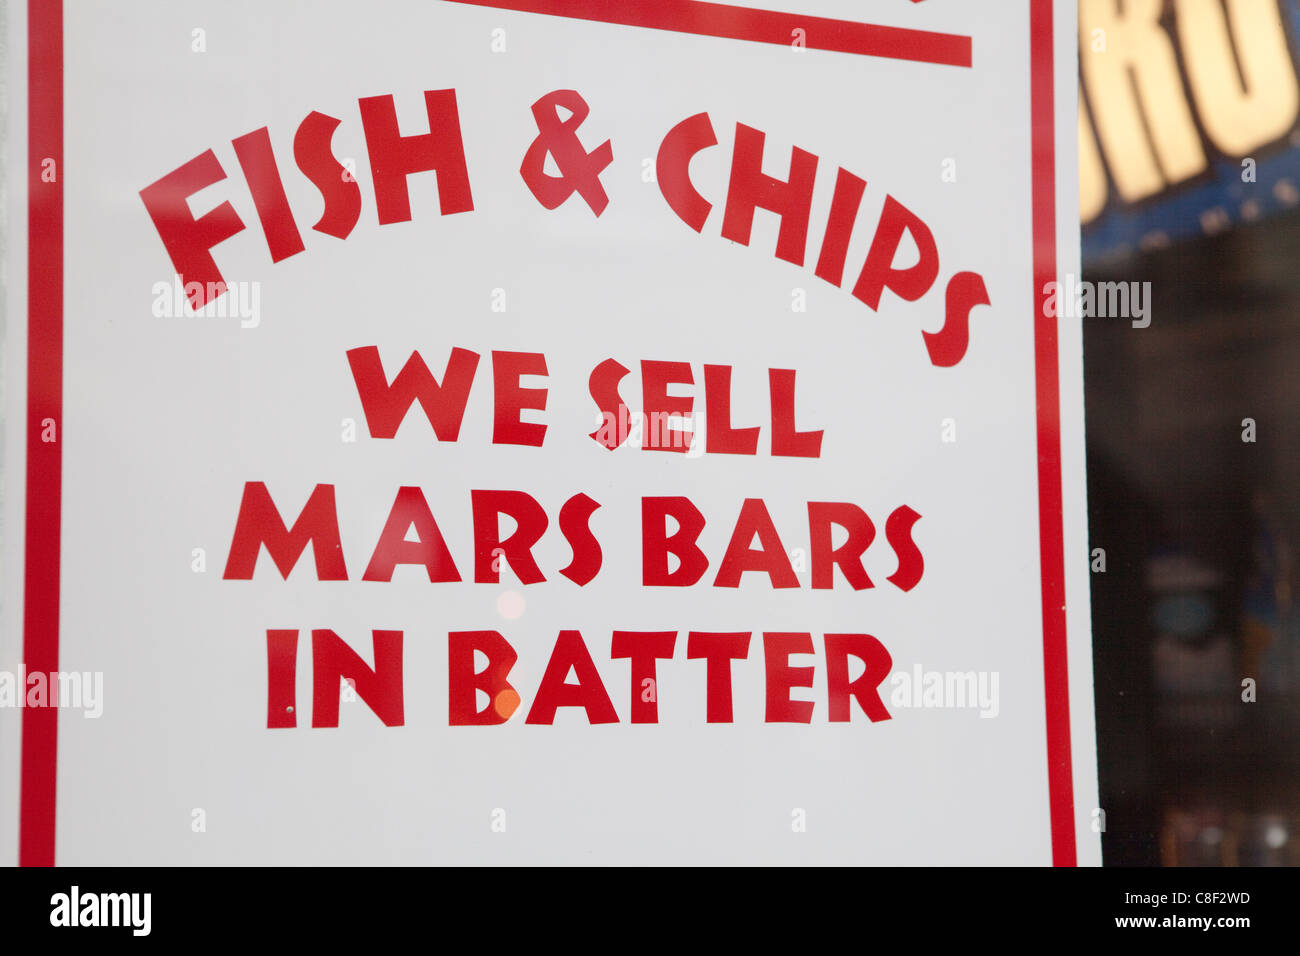 Fish and chips sign, Edinburgh, Scotland, United Kingdom Stock Photo